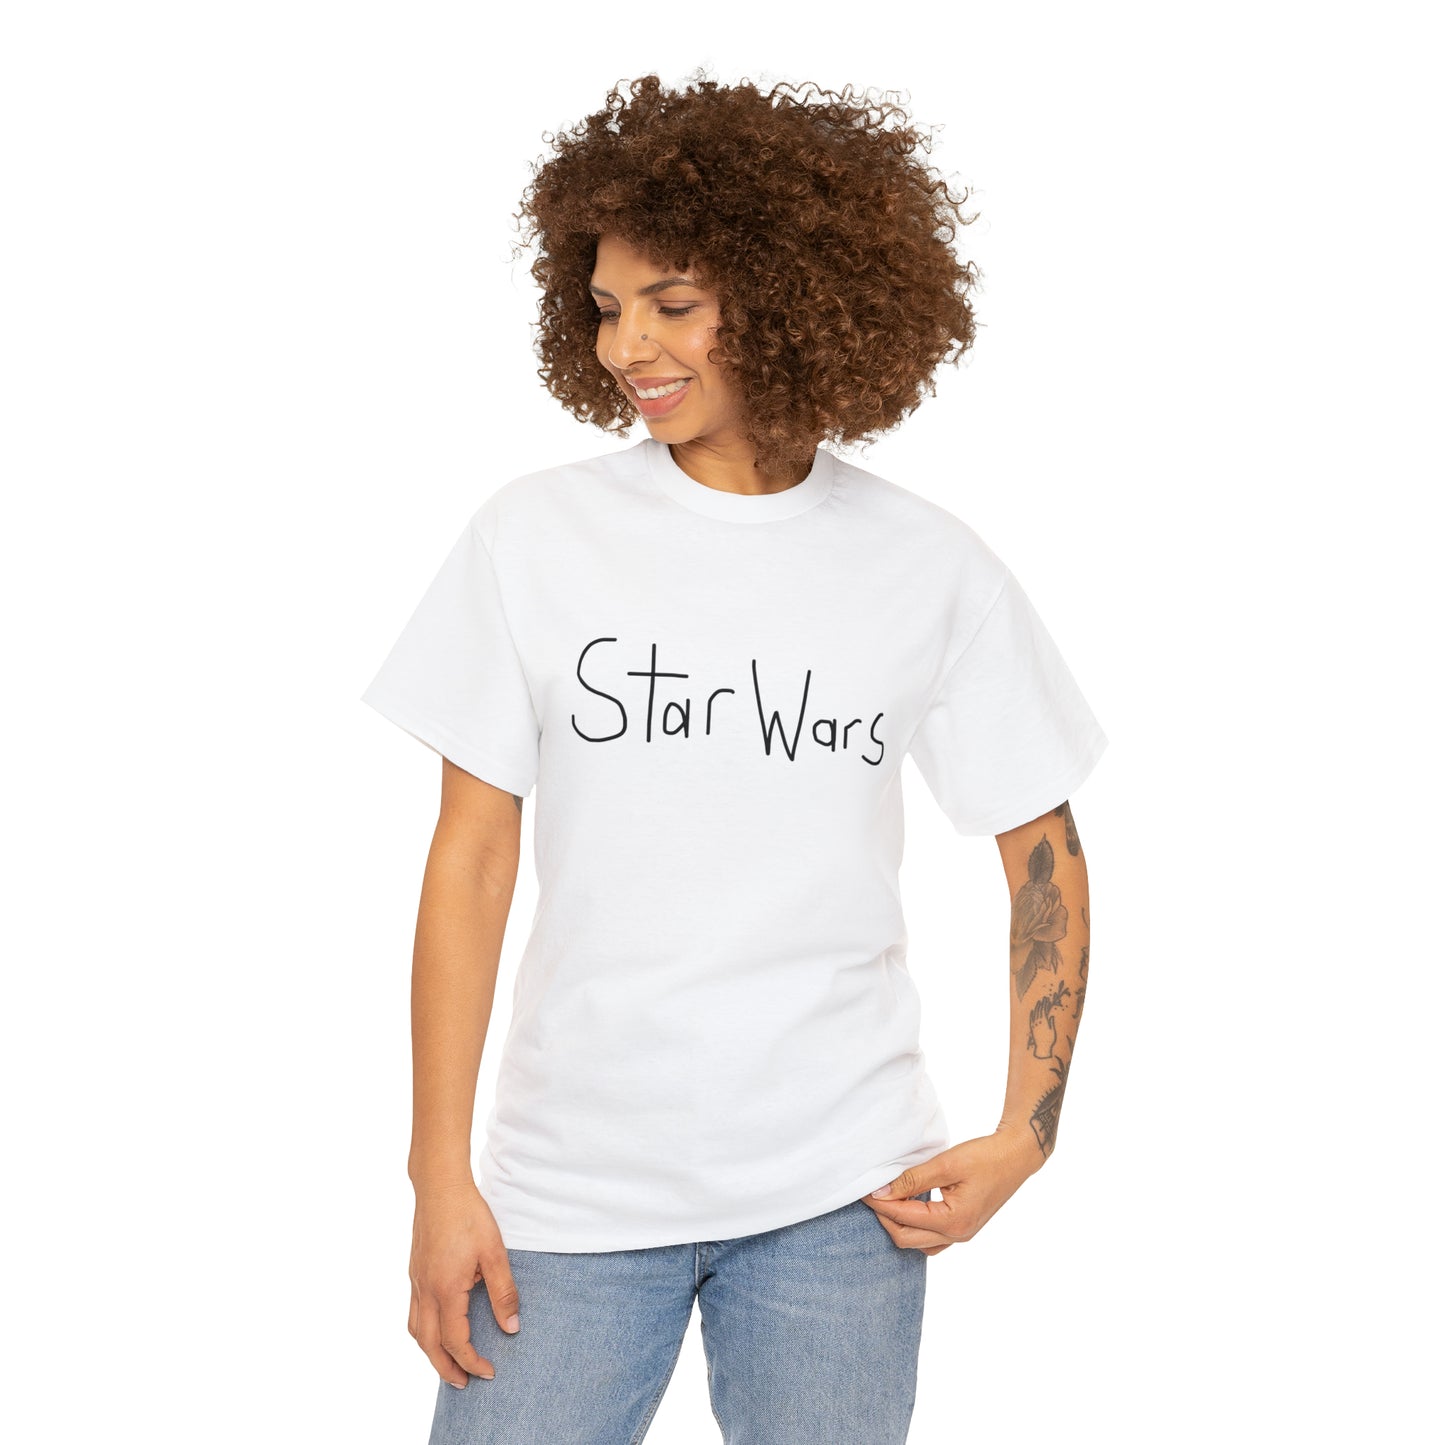 Star Wars T-Shirt!